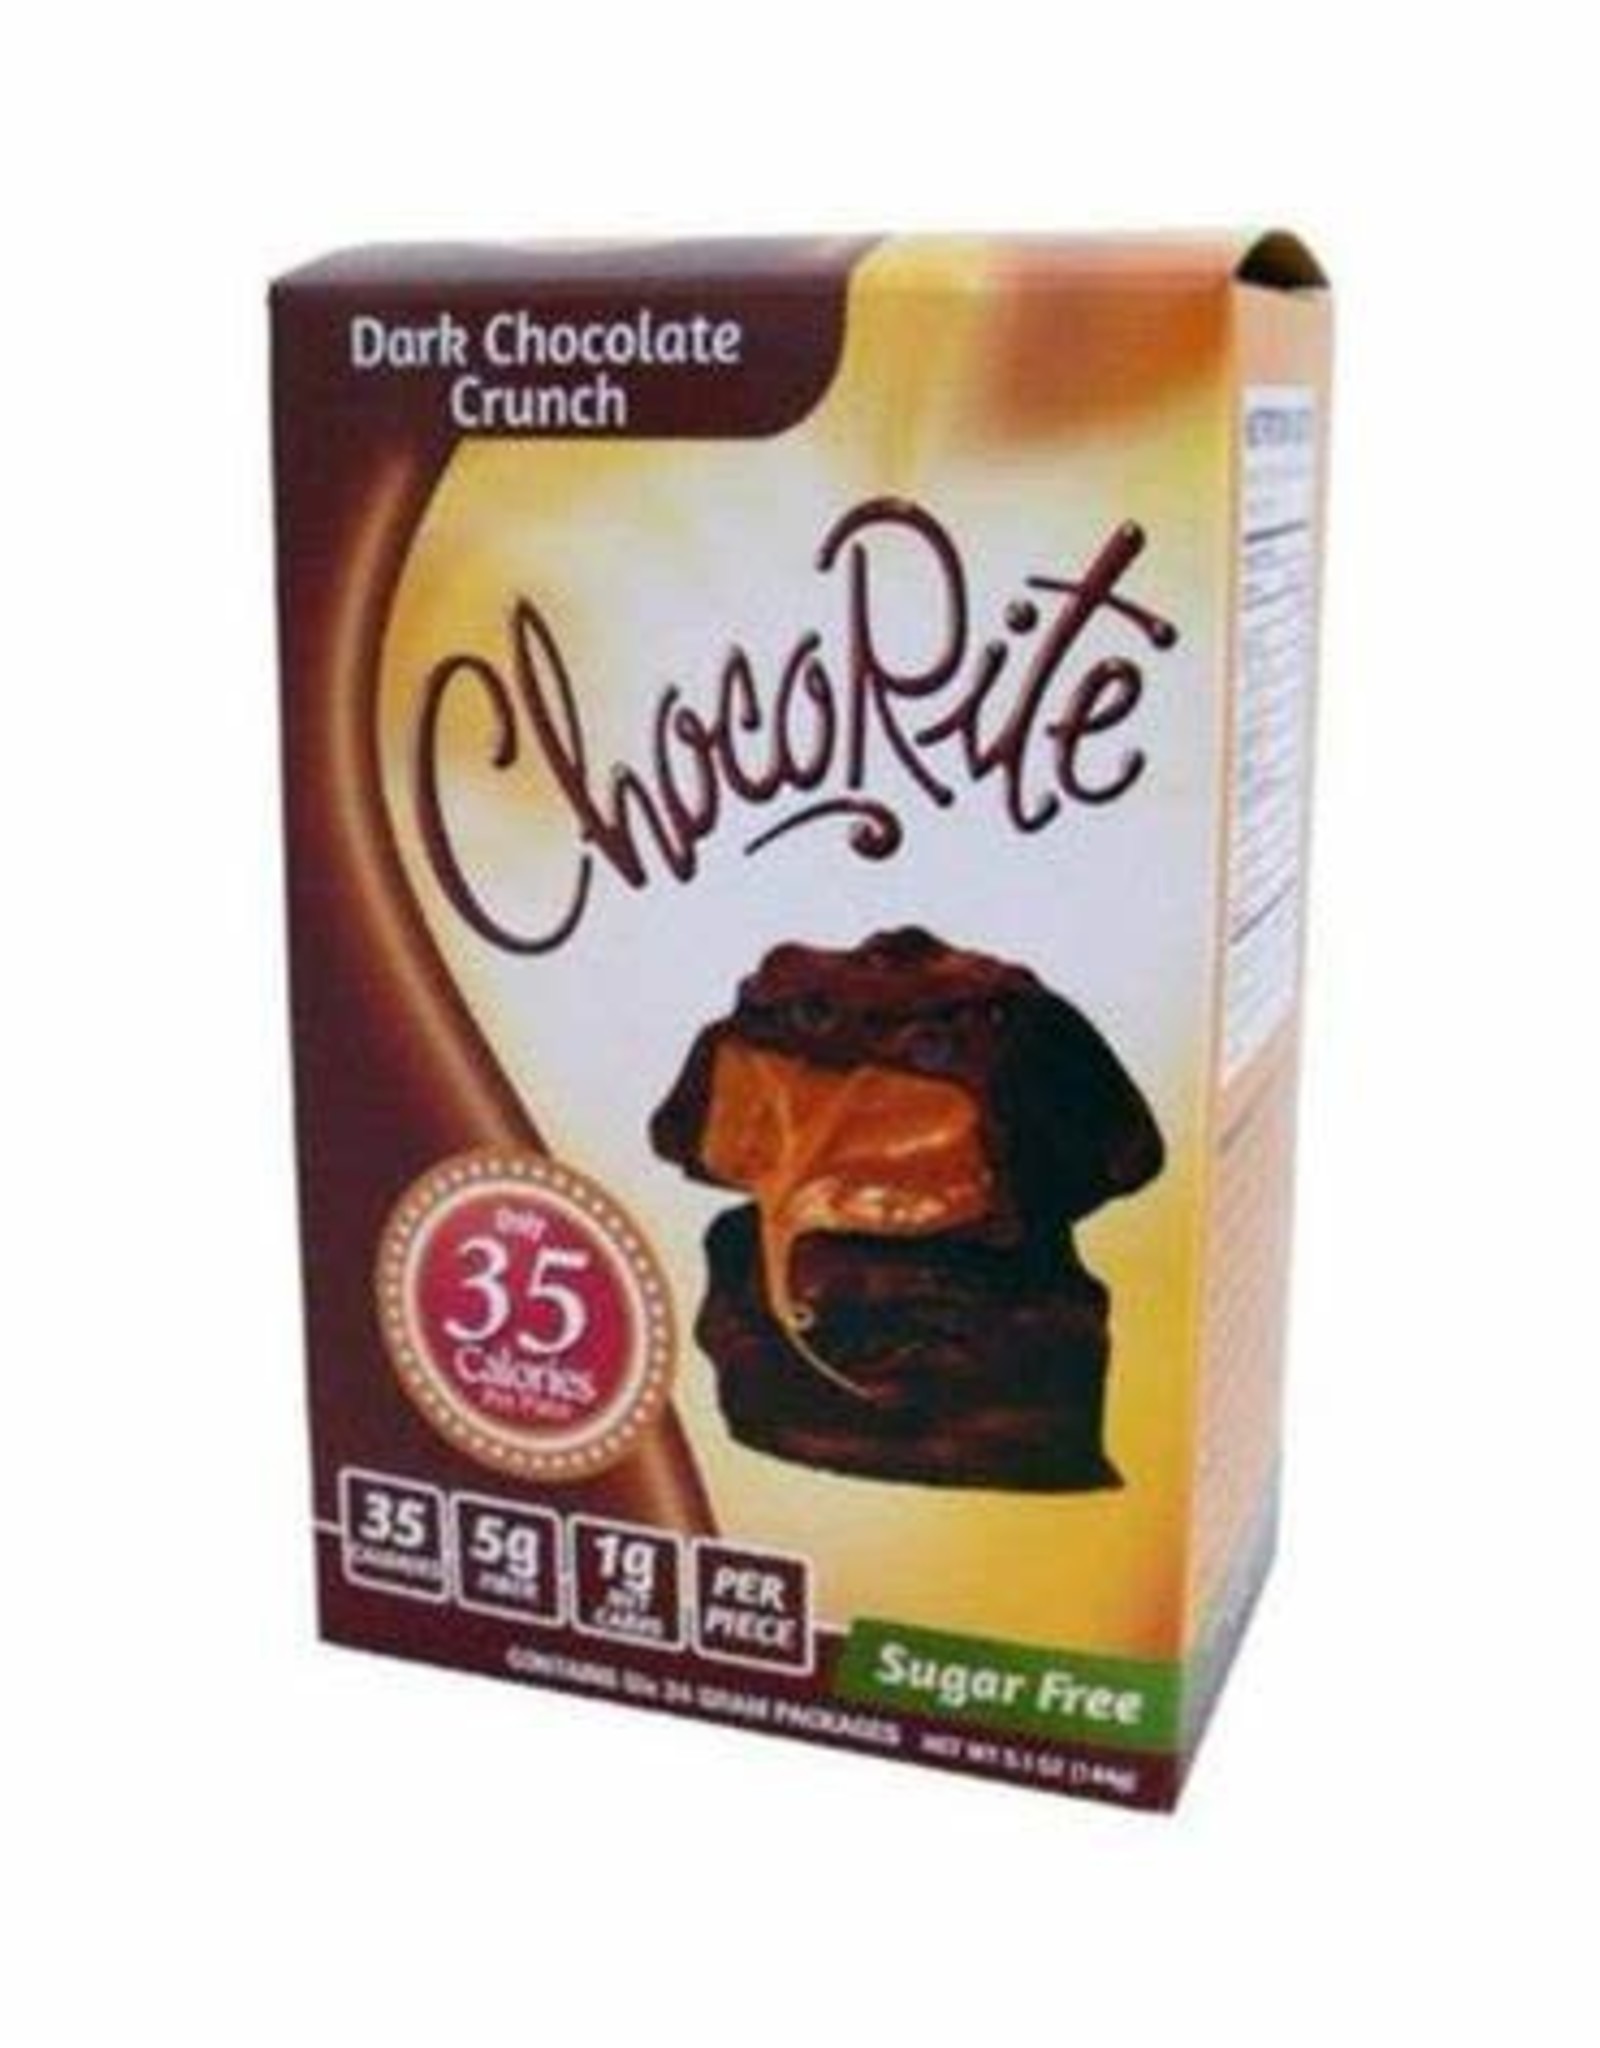 ChocoRite ChocoRite 6 pck Drk Choc Crunch (DISCONTINUED)